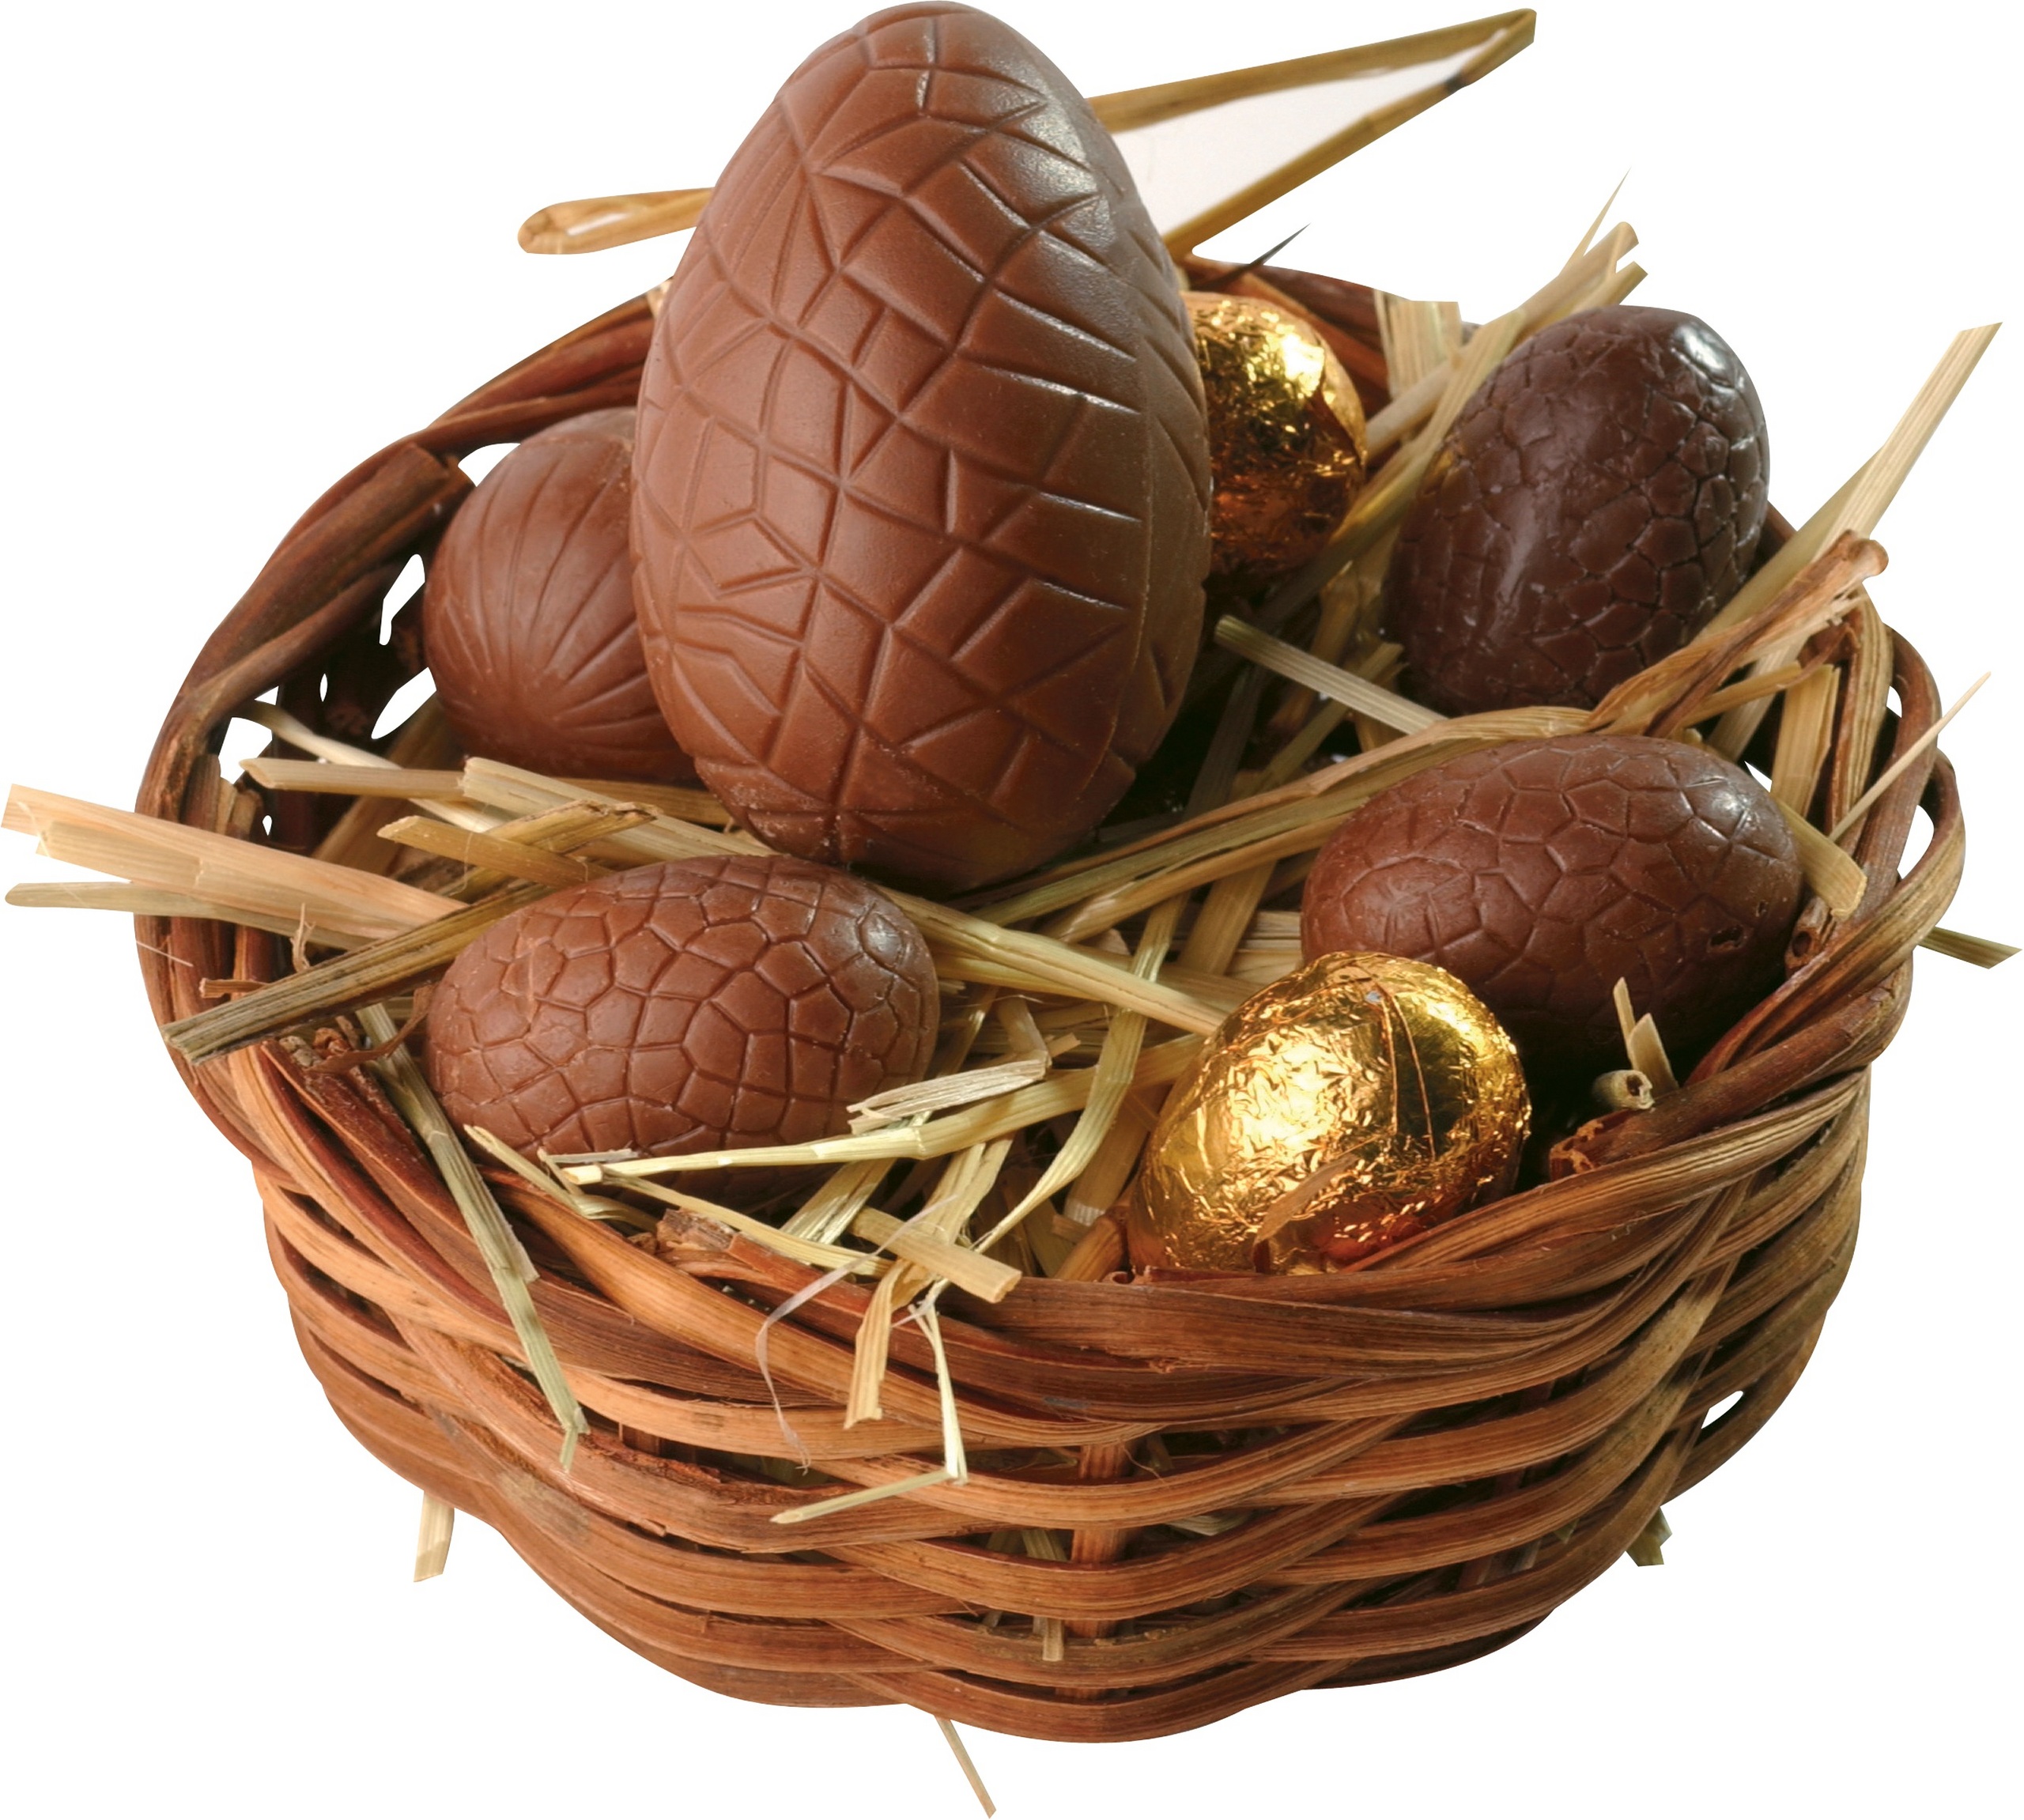 Chocolate Easter Egg - easter eggs Photo (30423577) - Fanpop